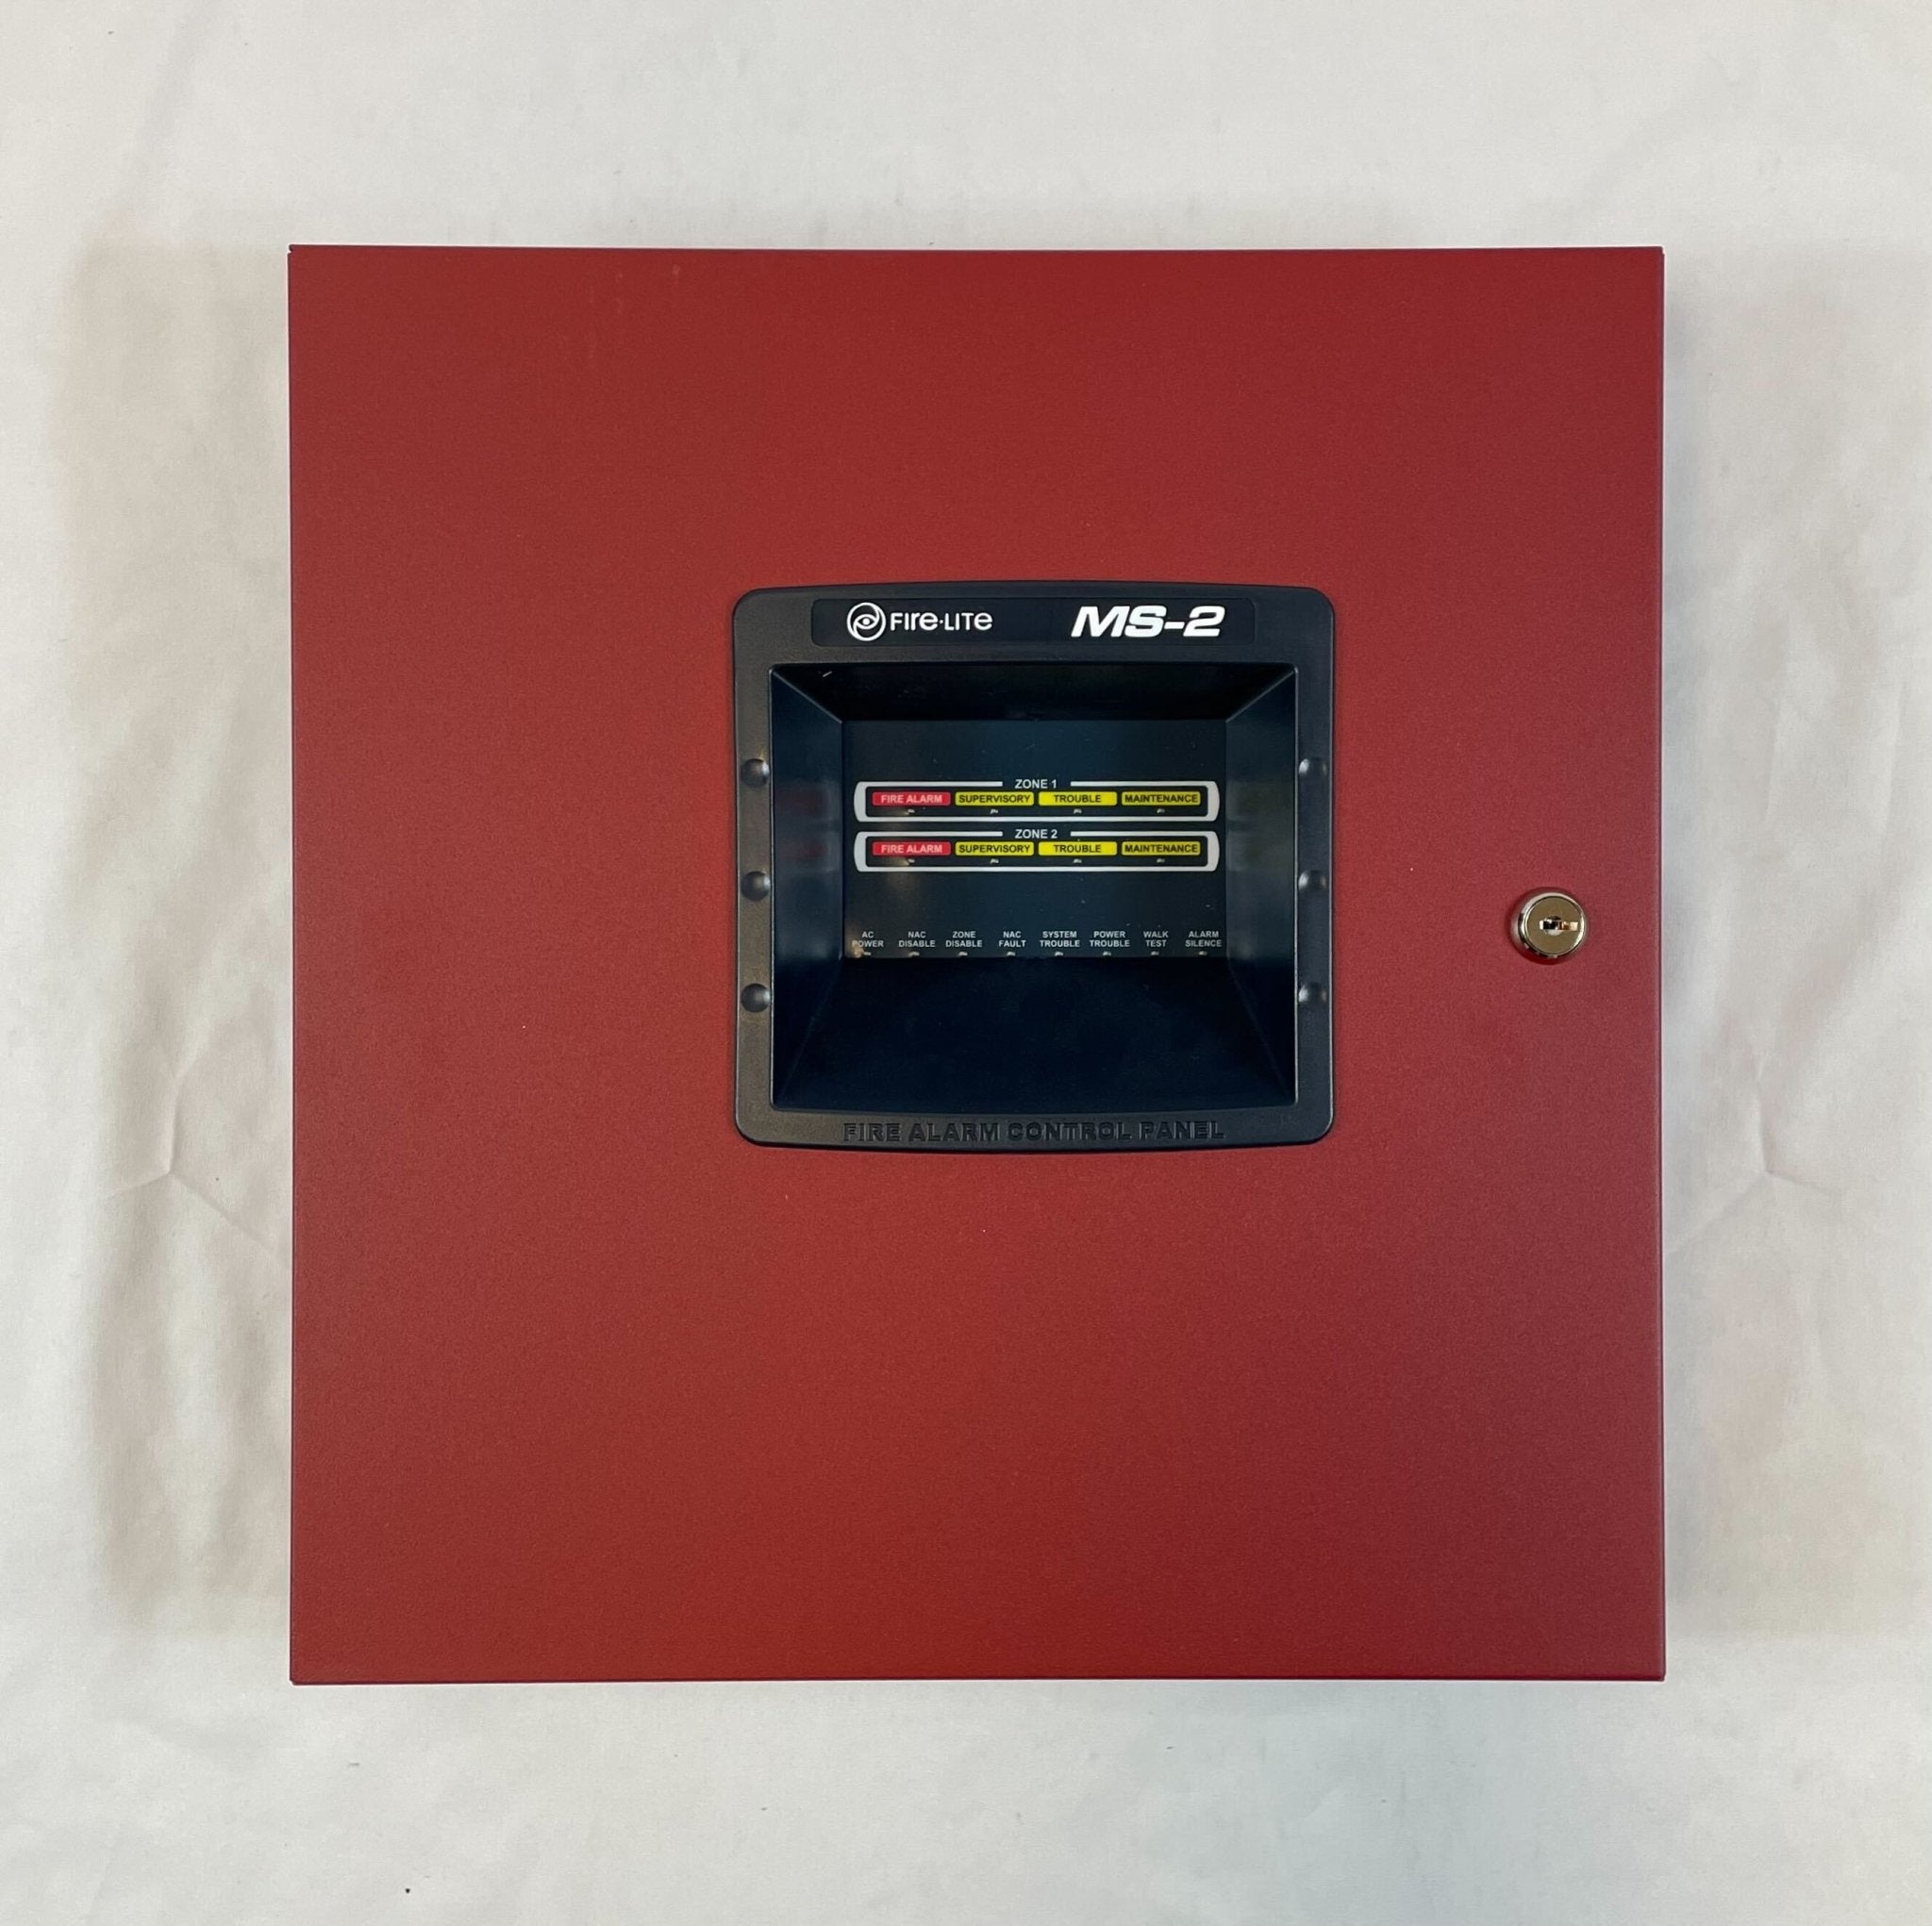 Firelite MS-2 - The Fire Alarm Supplier